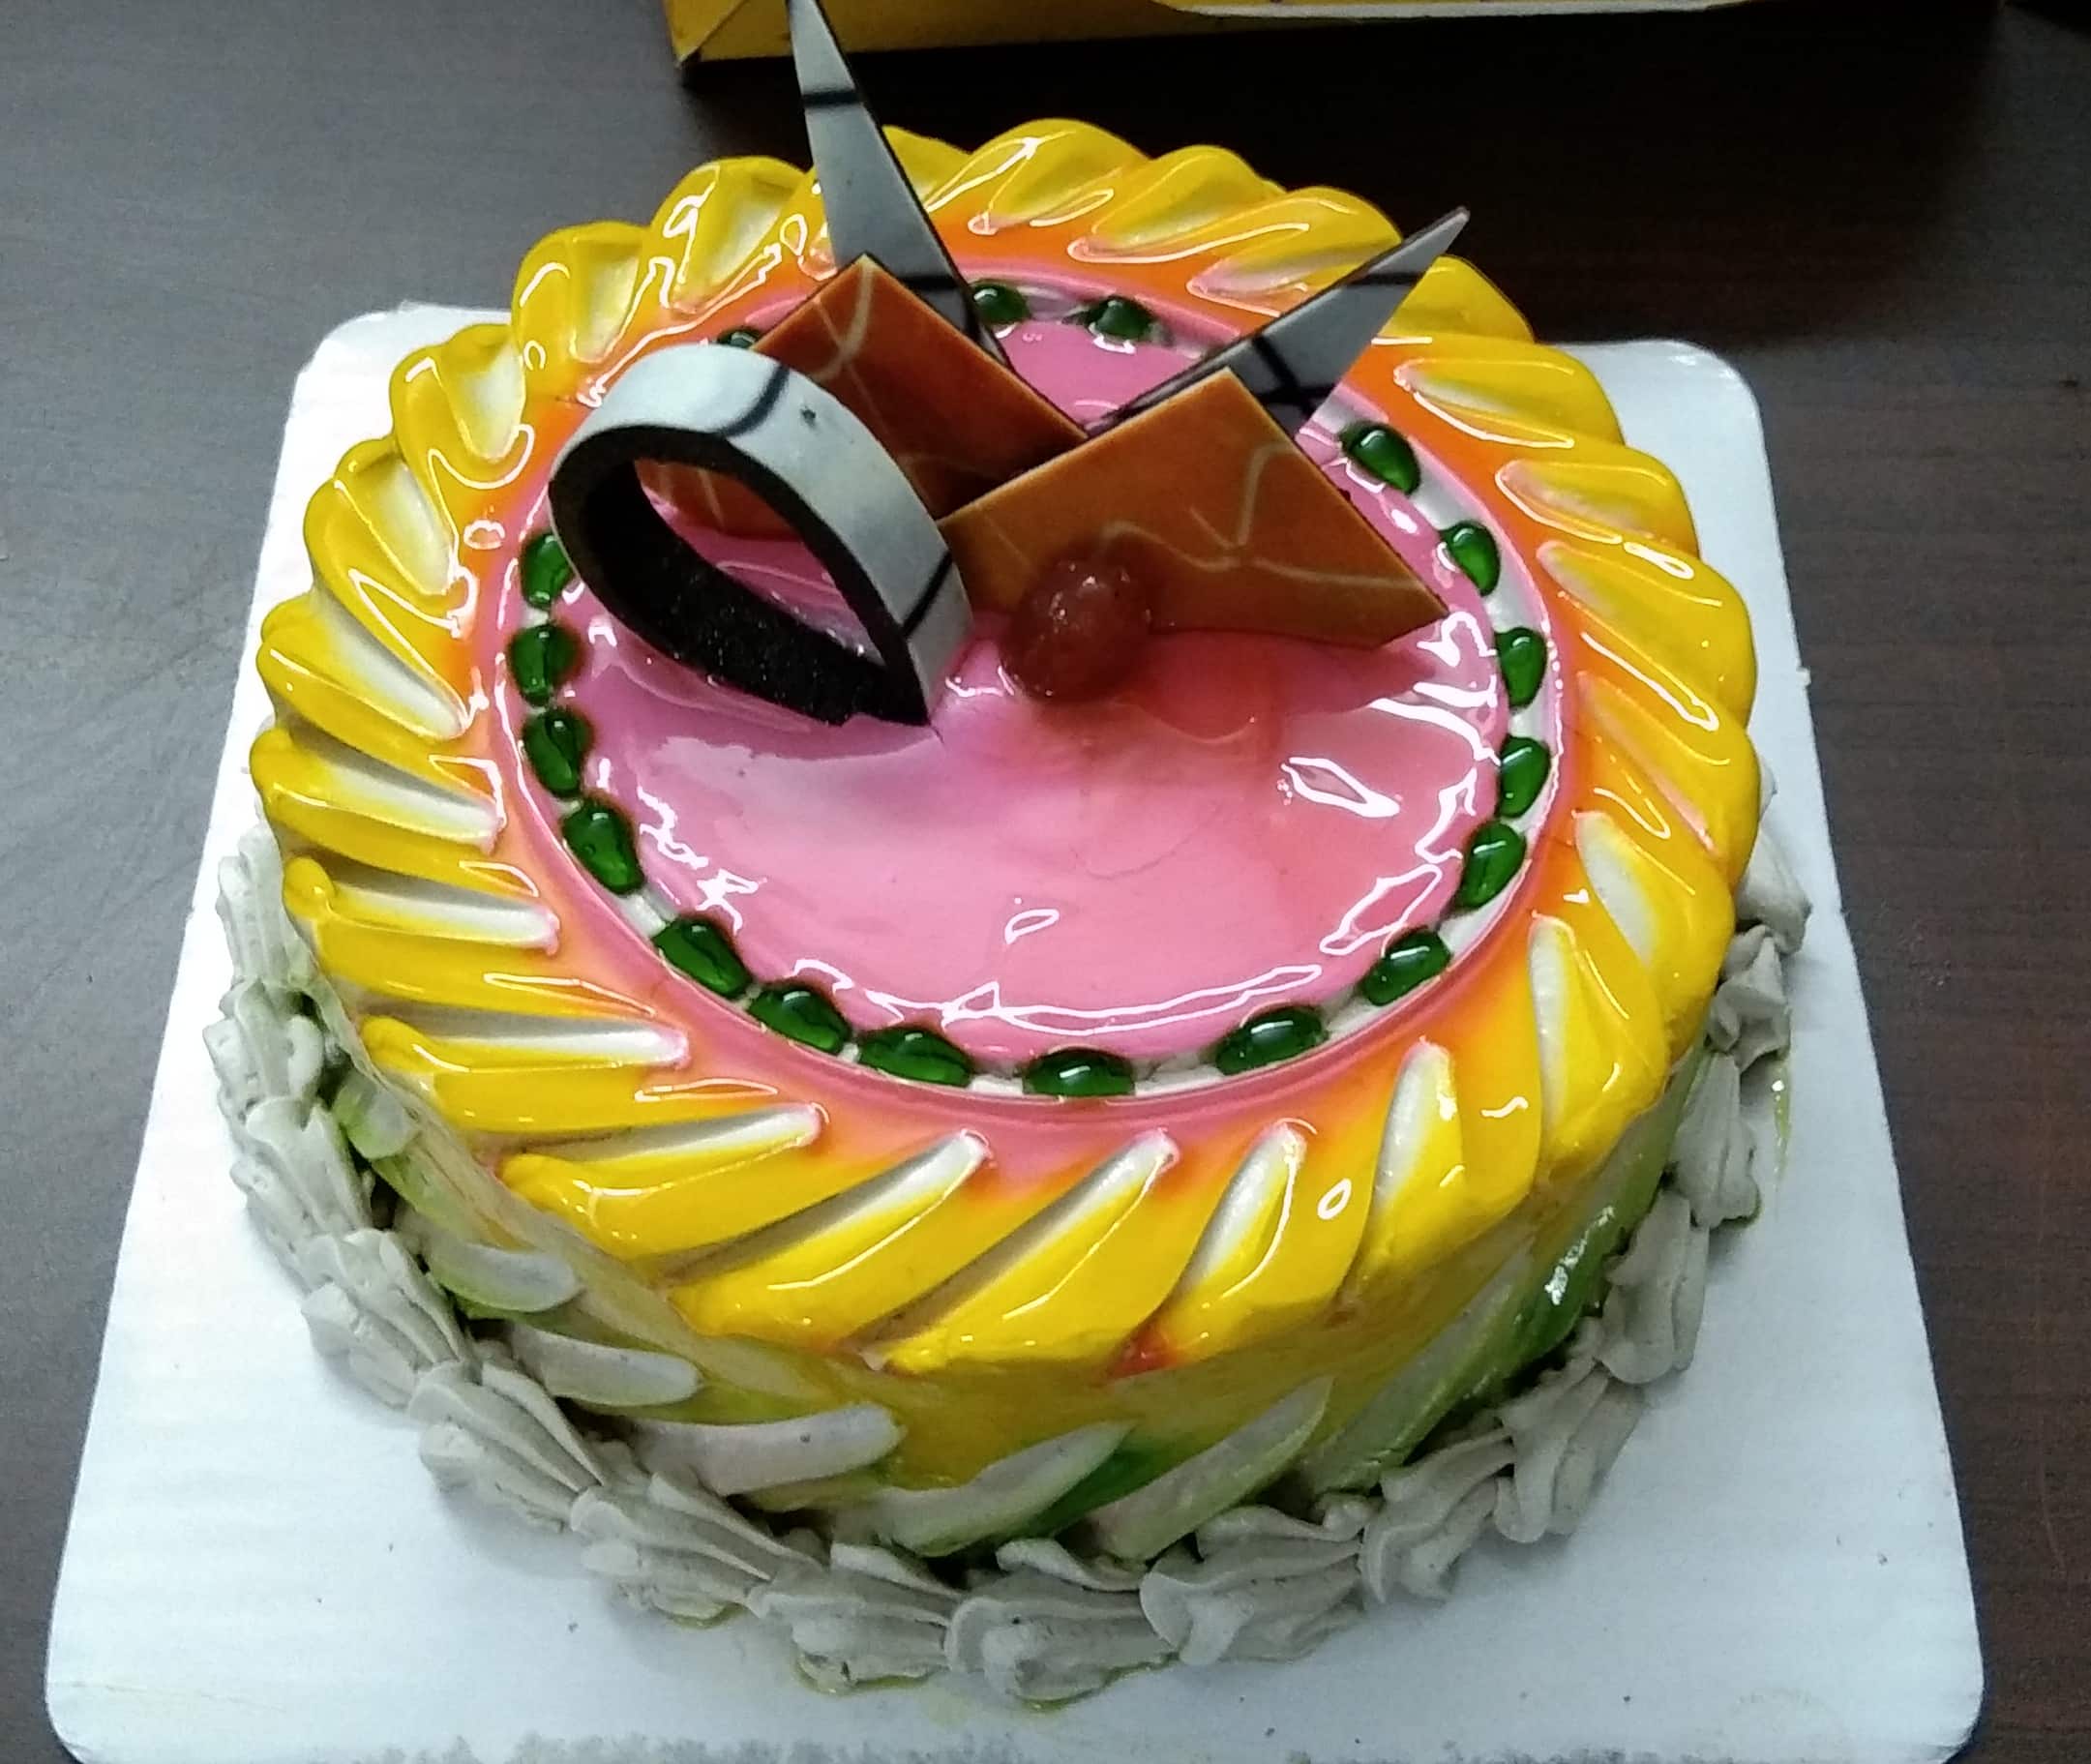 Cake Honey Buzz, Vivekanand Nagar order online - Zomato